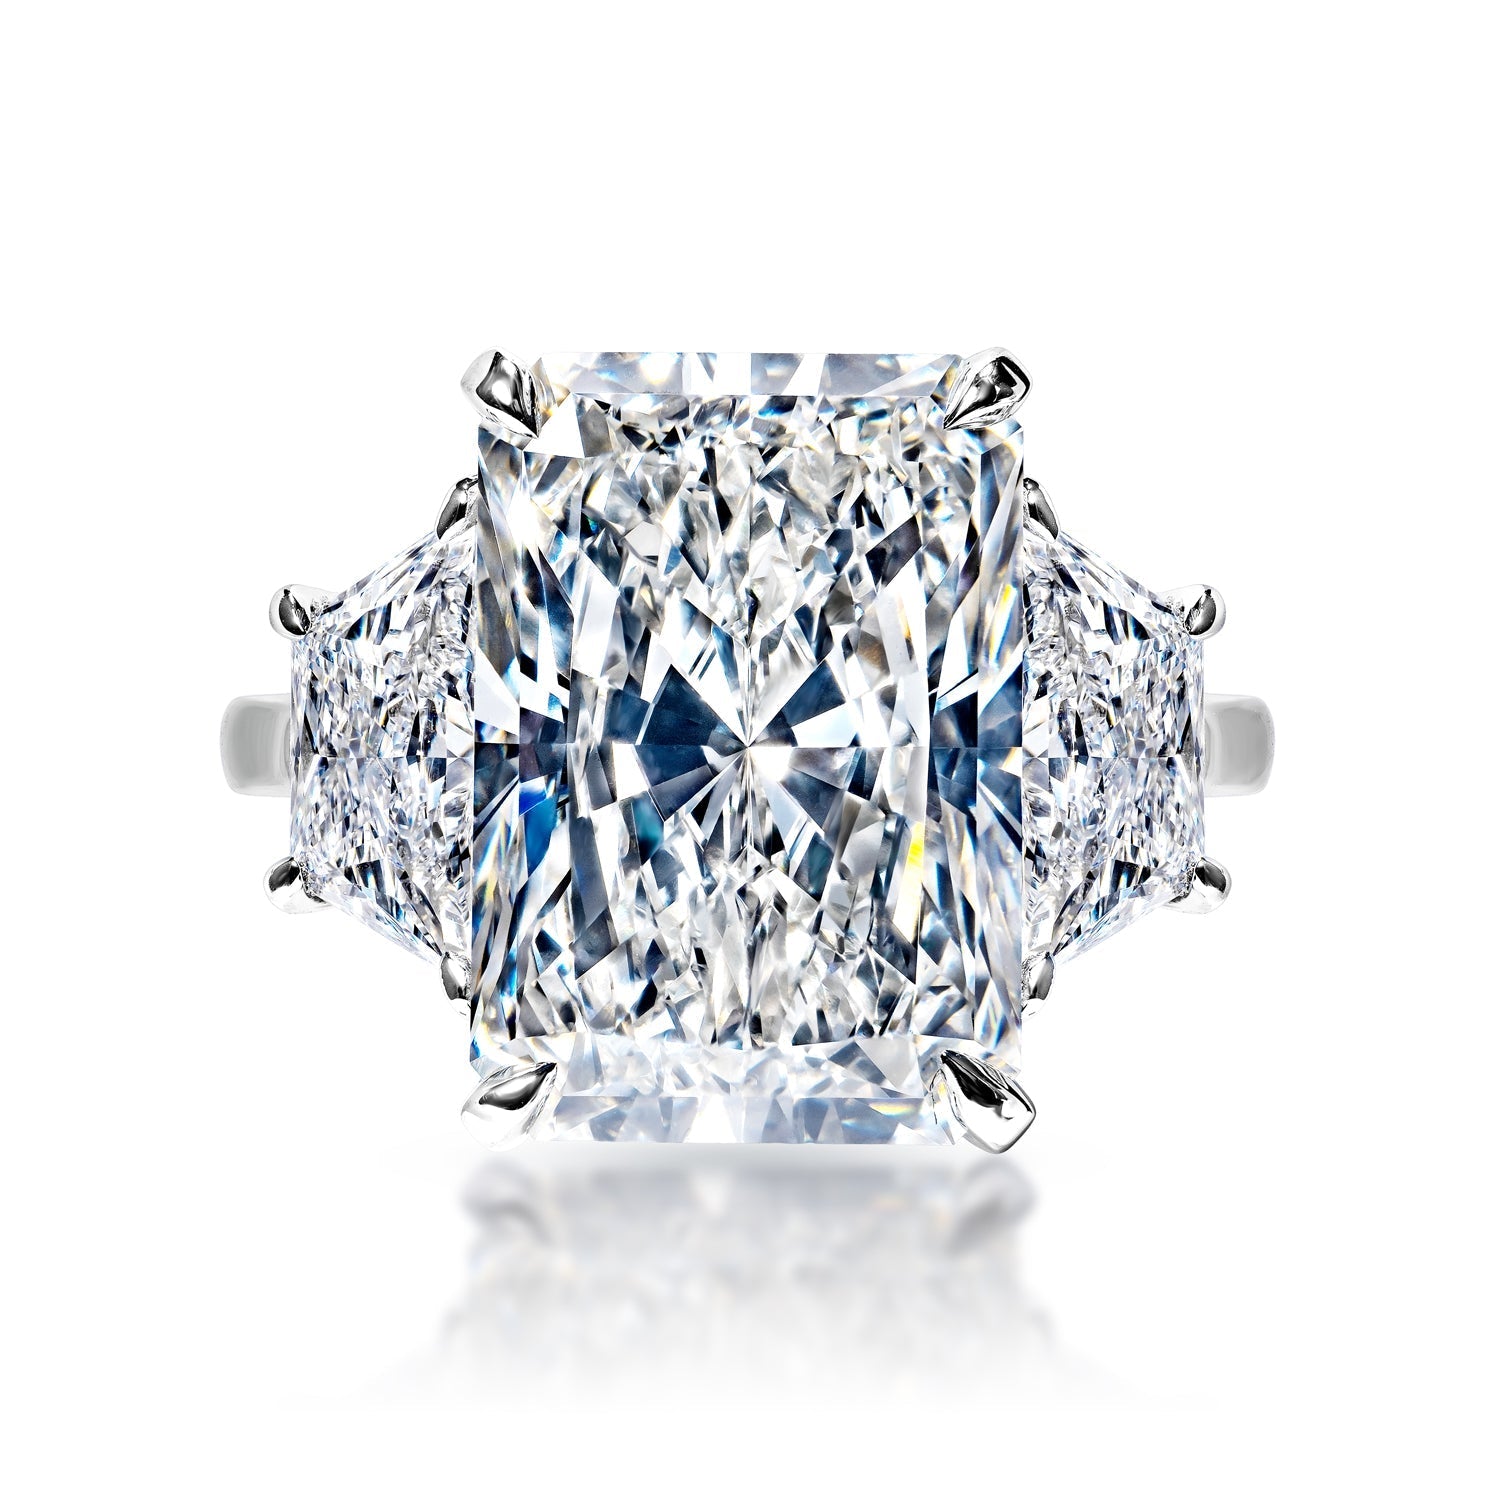 Leoda 10 Carat G VS1 Radiant Cut Diamond Engagement Ring in Platinum. IGI Certified Front View